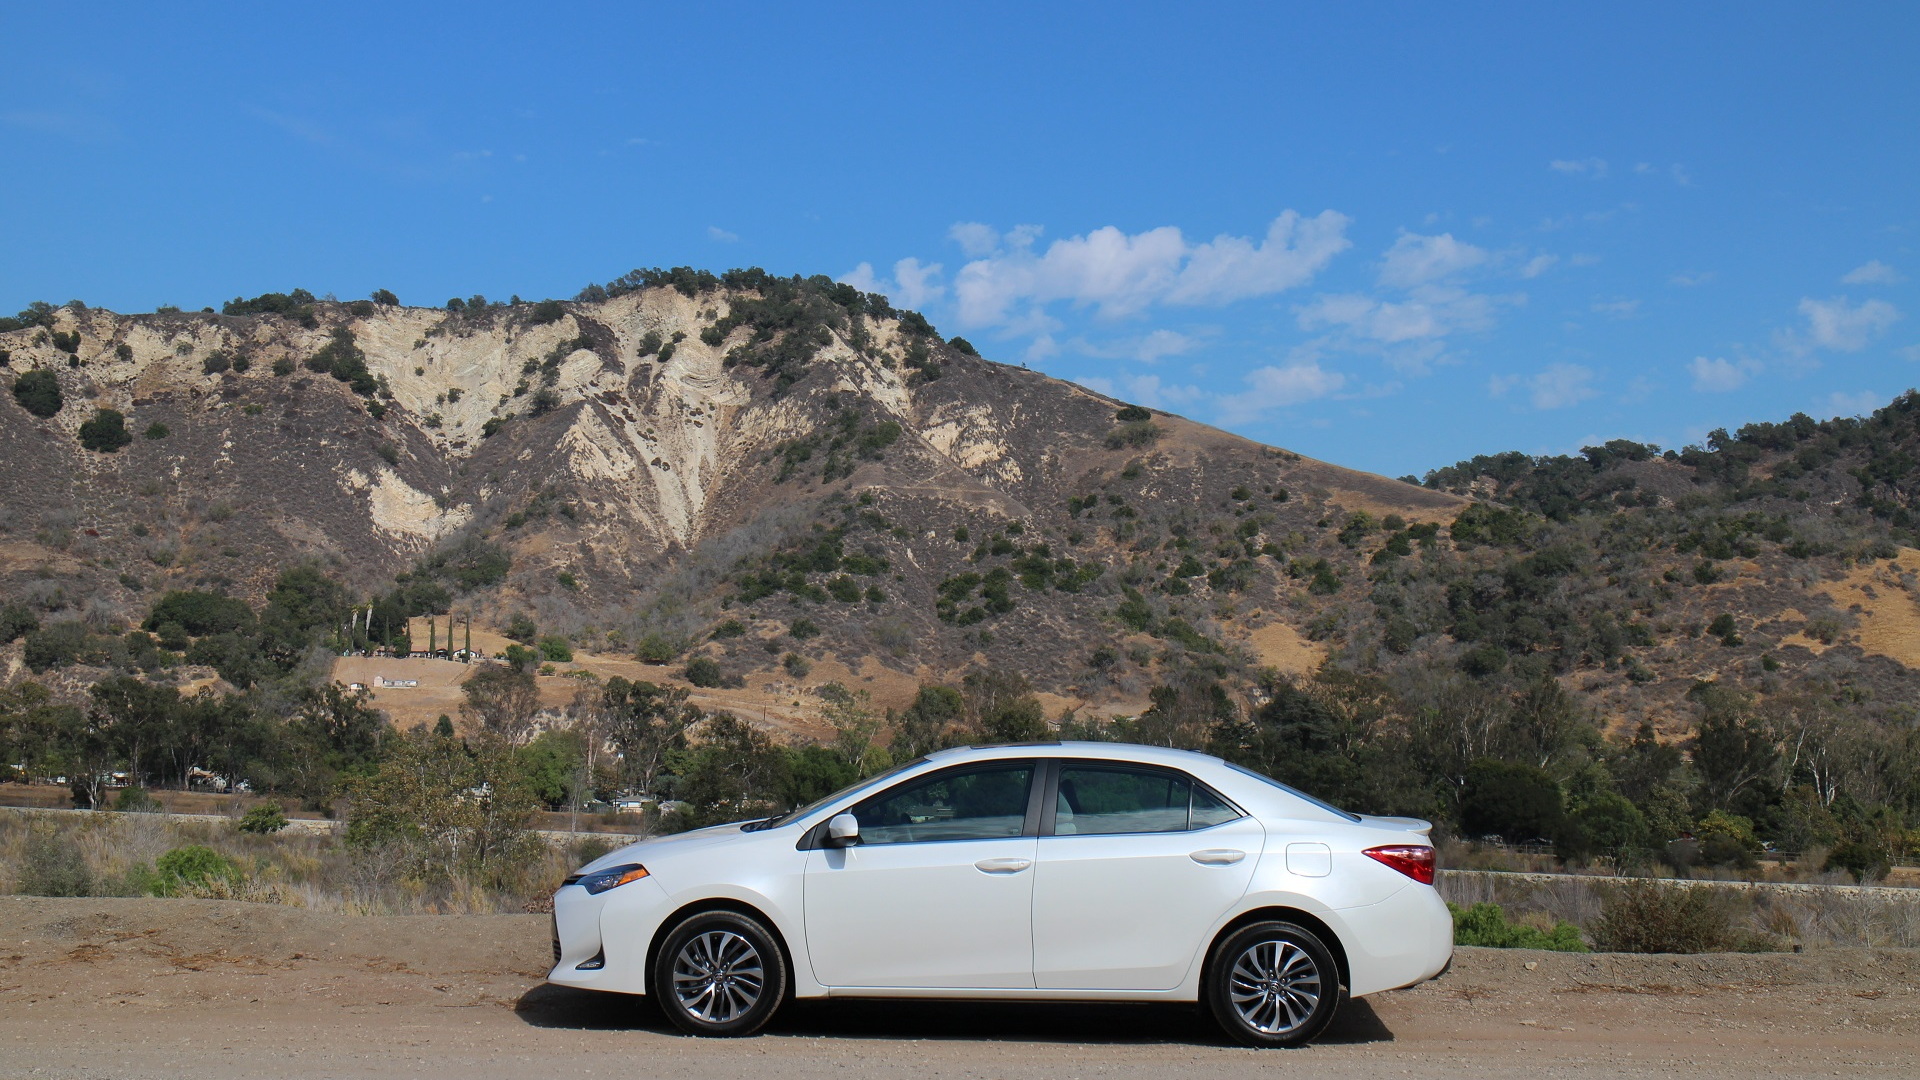 2017 Toyota Corolla, test drive, Ojai, California, Sep 2016